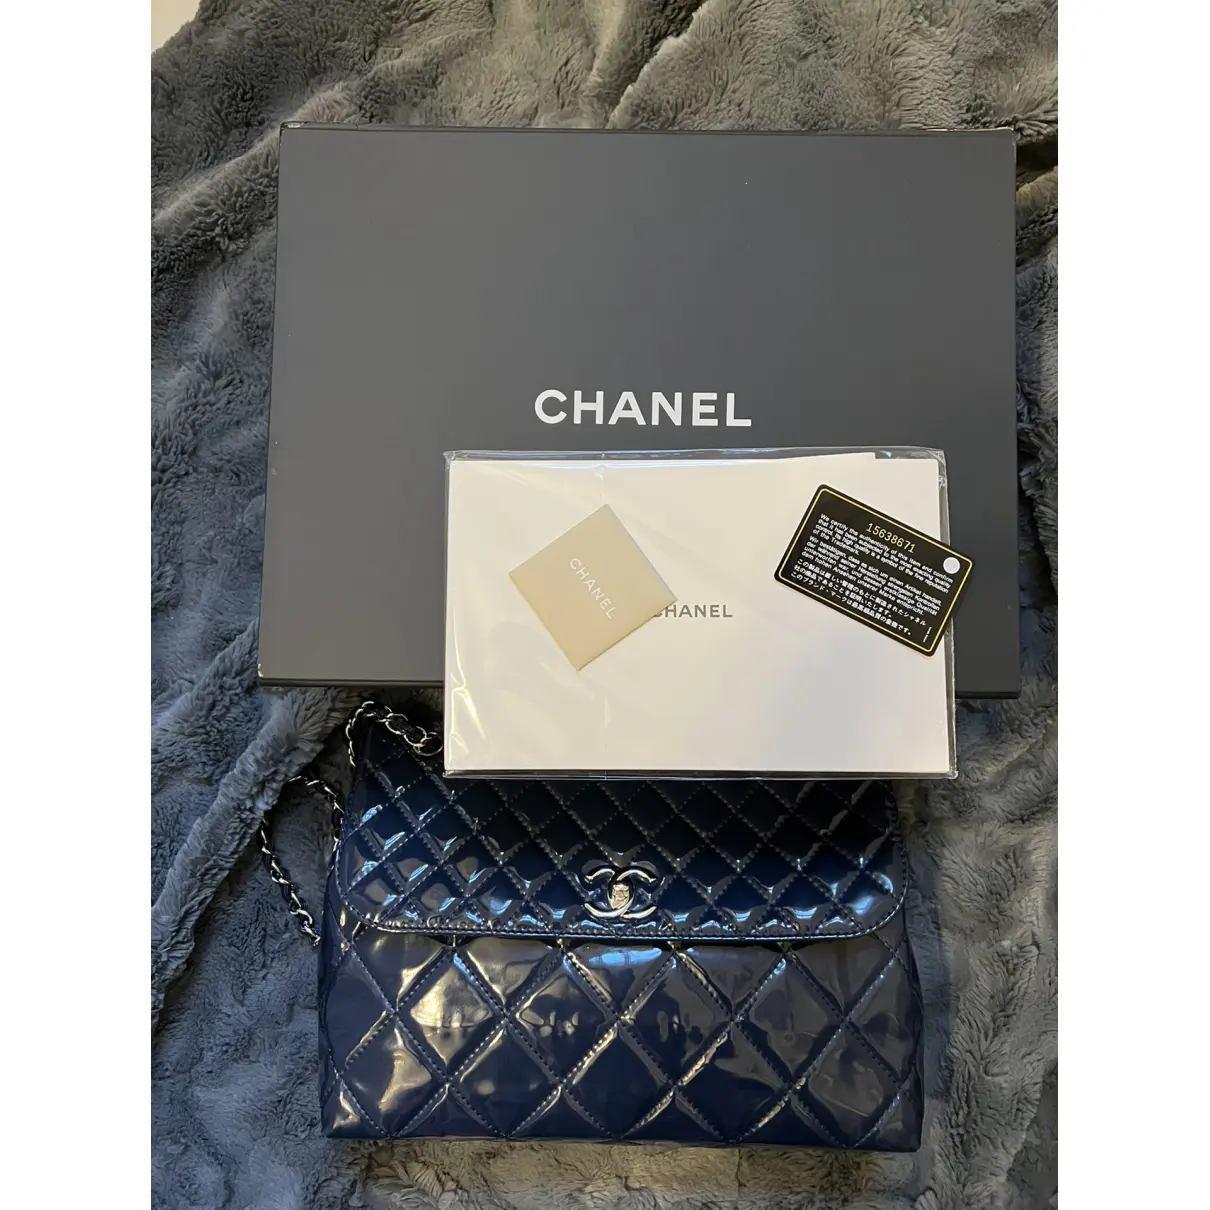 Buy Chanel Business Affinity patent leather handbag online